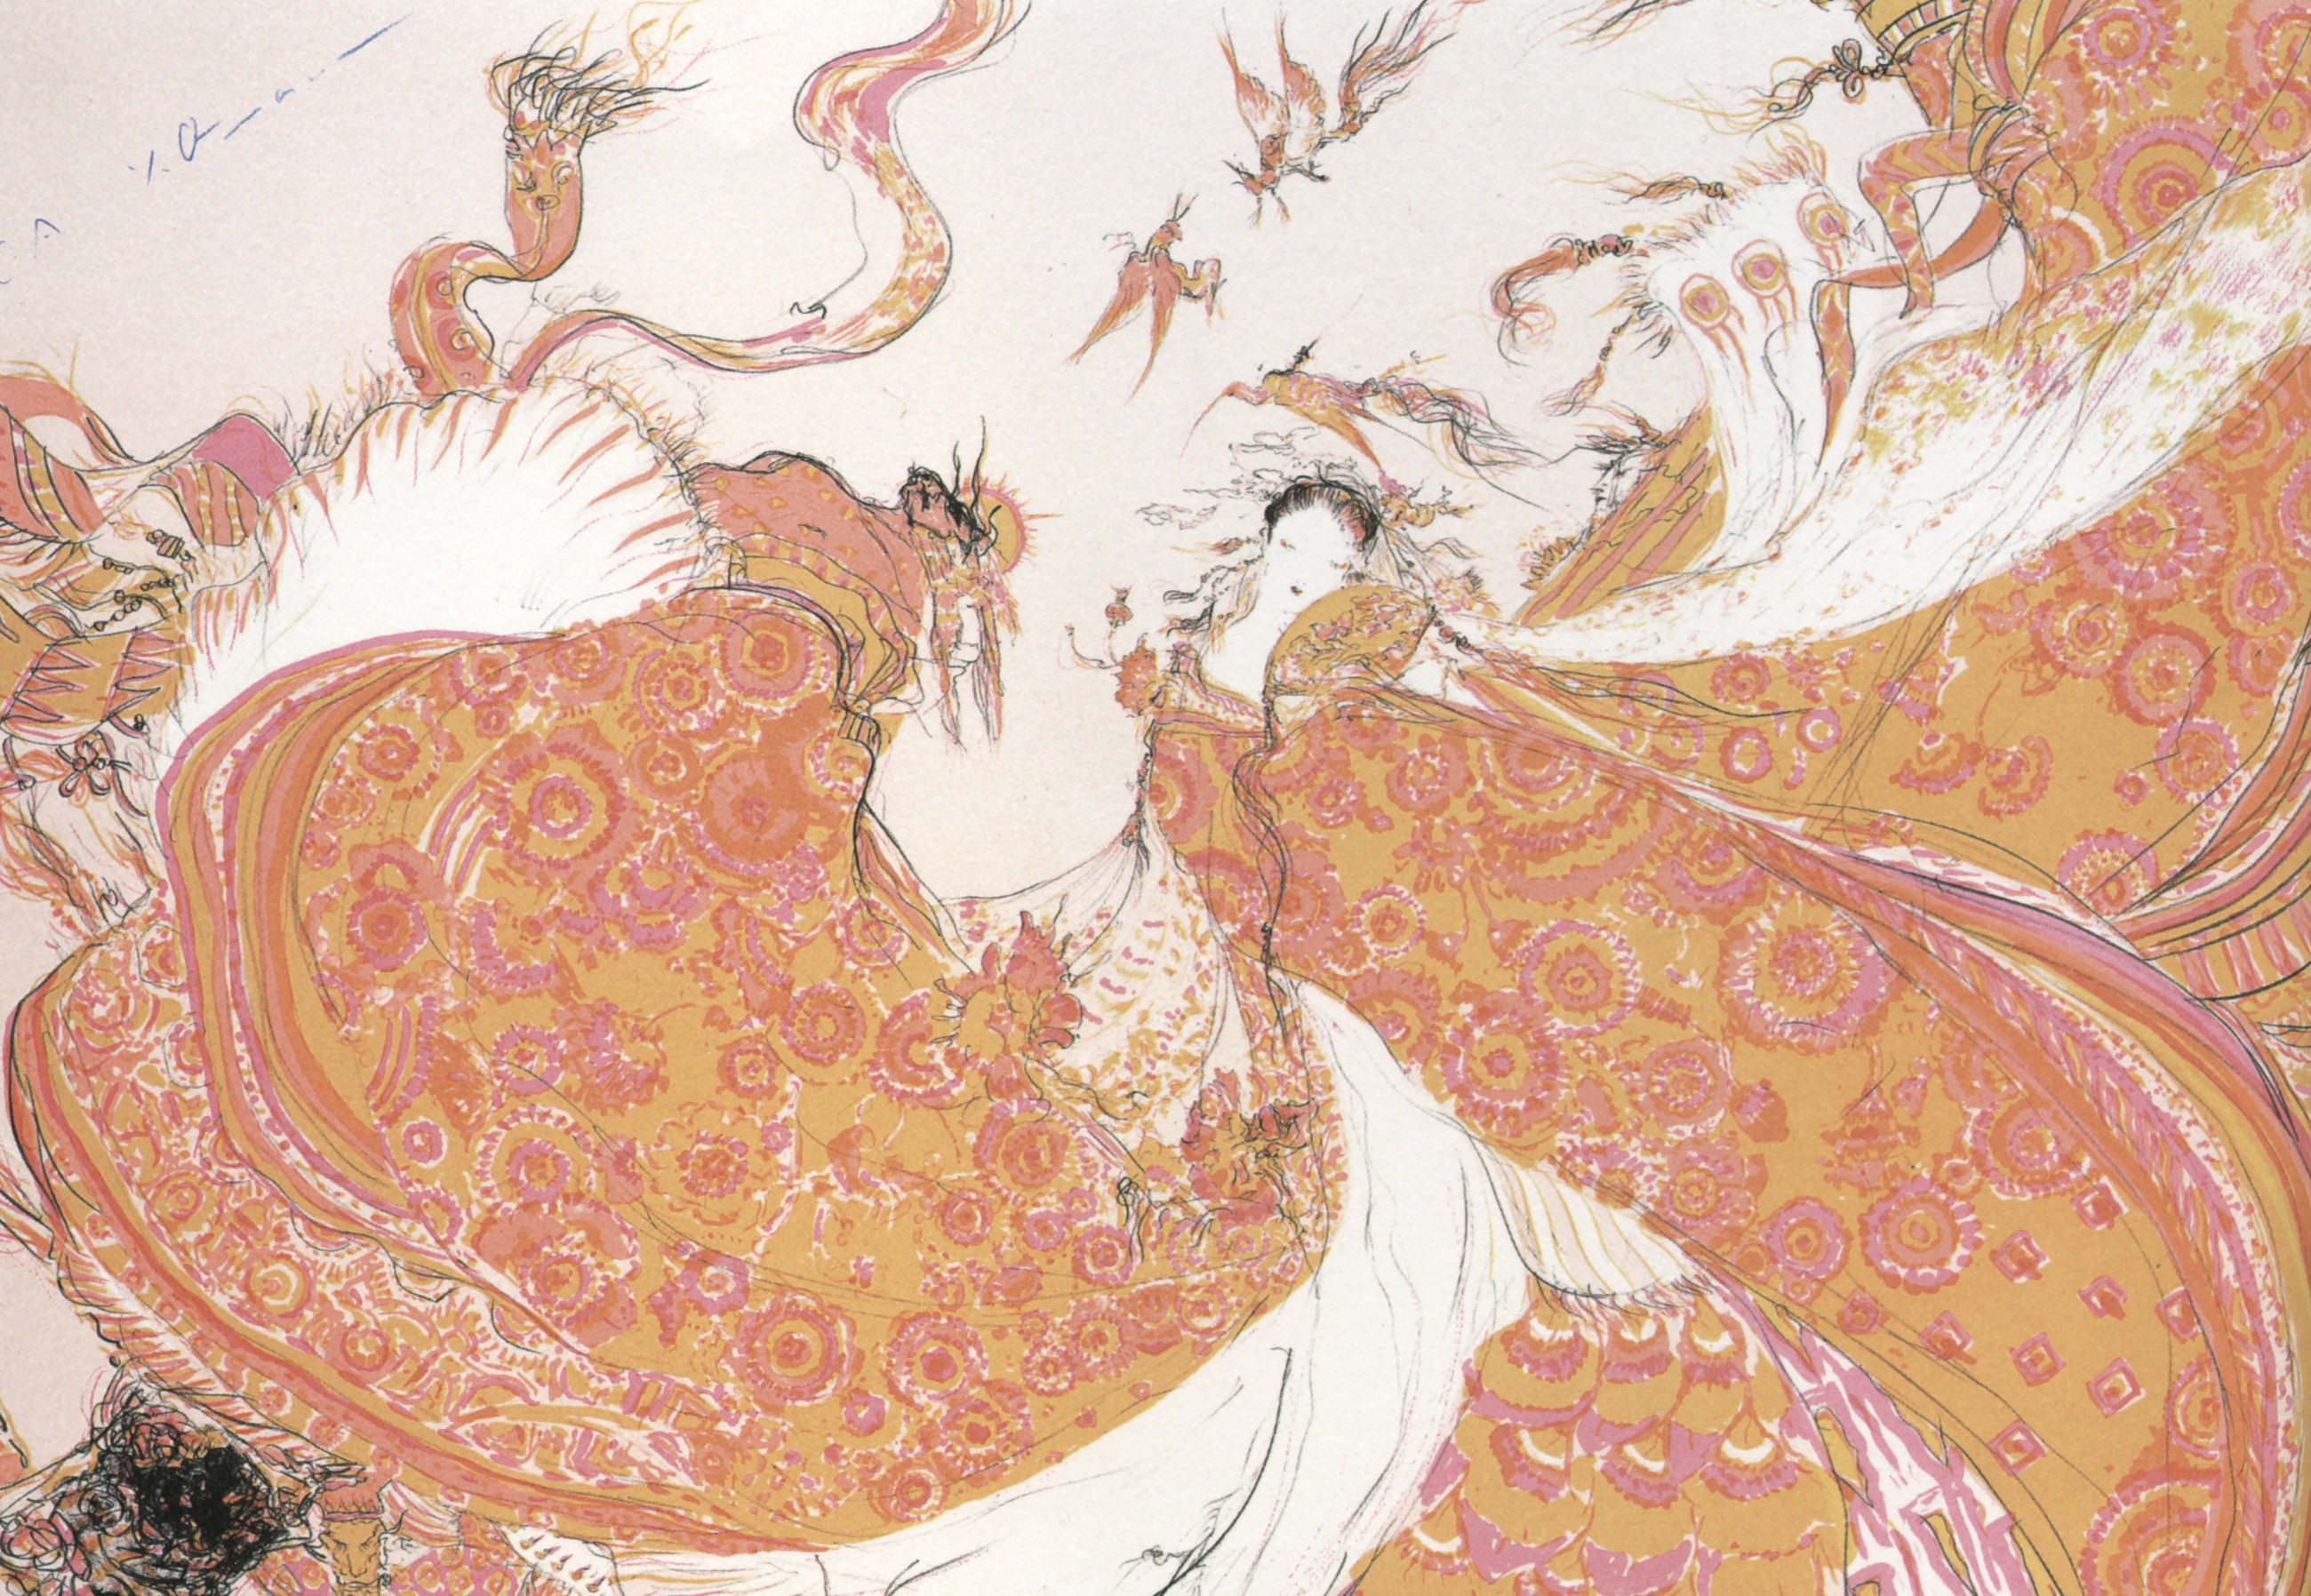 Download Amano The Complete Prints of Yoshitaka Amano image